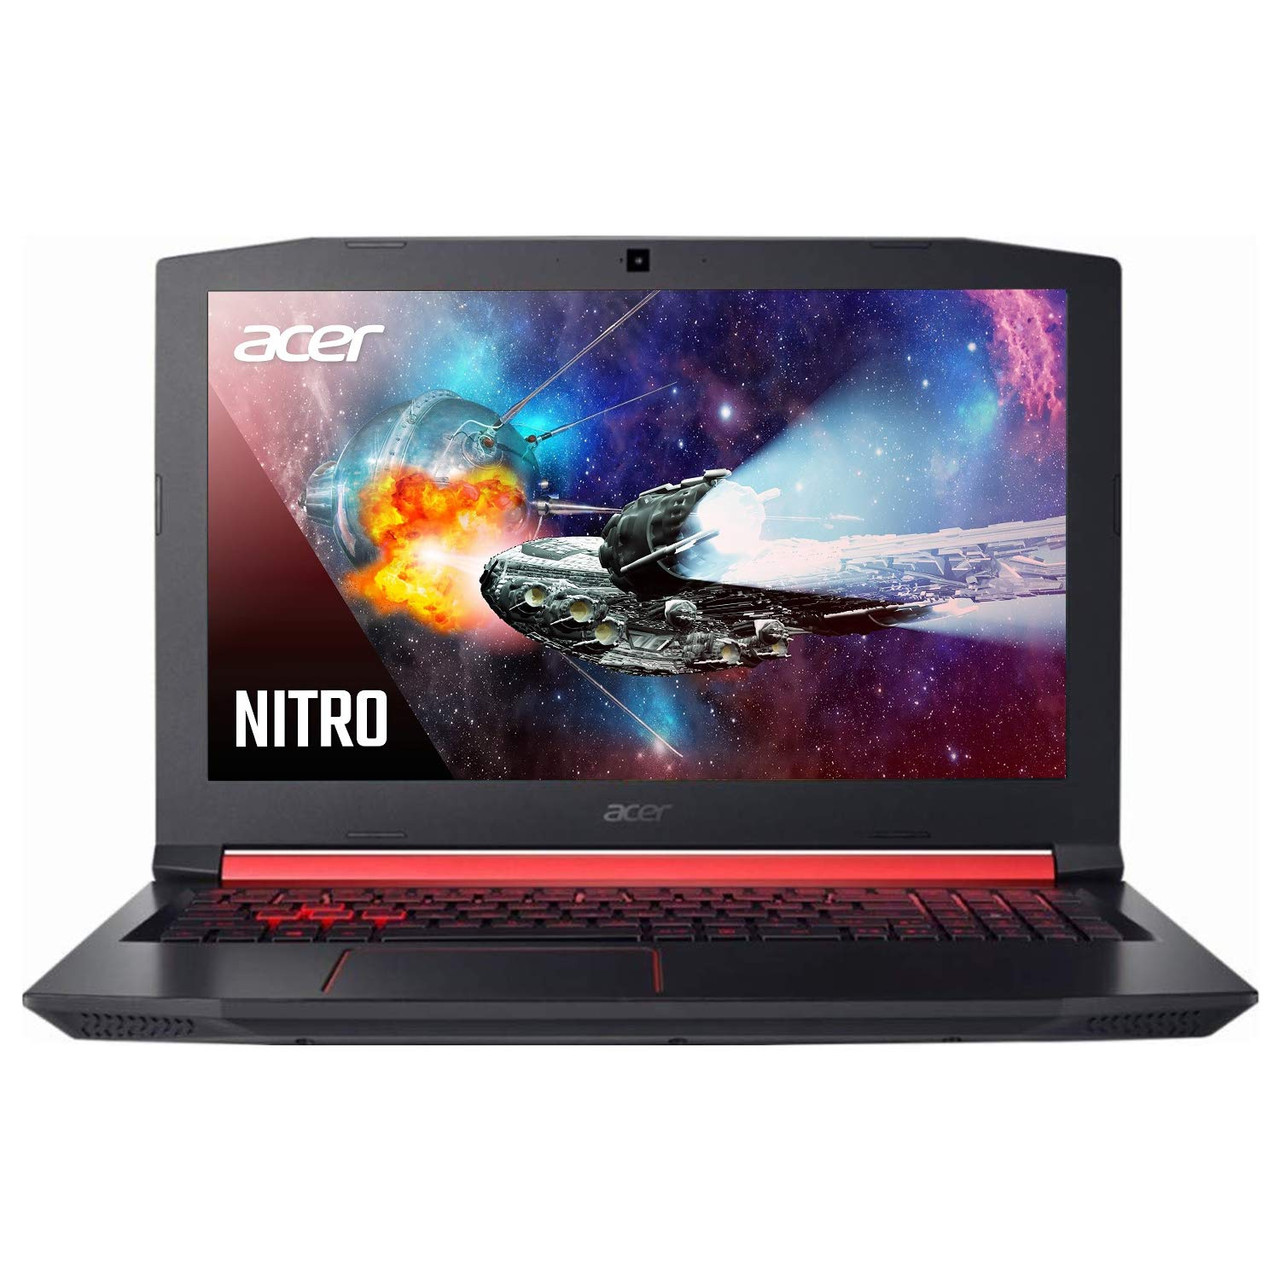 Acer Nitro 5 Gaming Laptop: AMD Ryzen 5 2500U, Radeon RX 560X, 8GB RAM, 1TB  HDD, 15.6" Full HD IPS Display - Klick Online